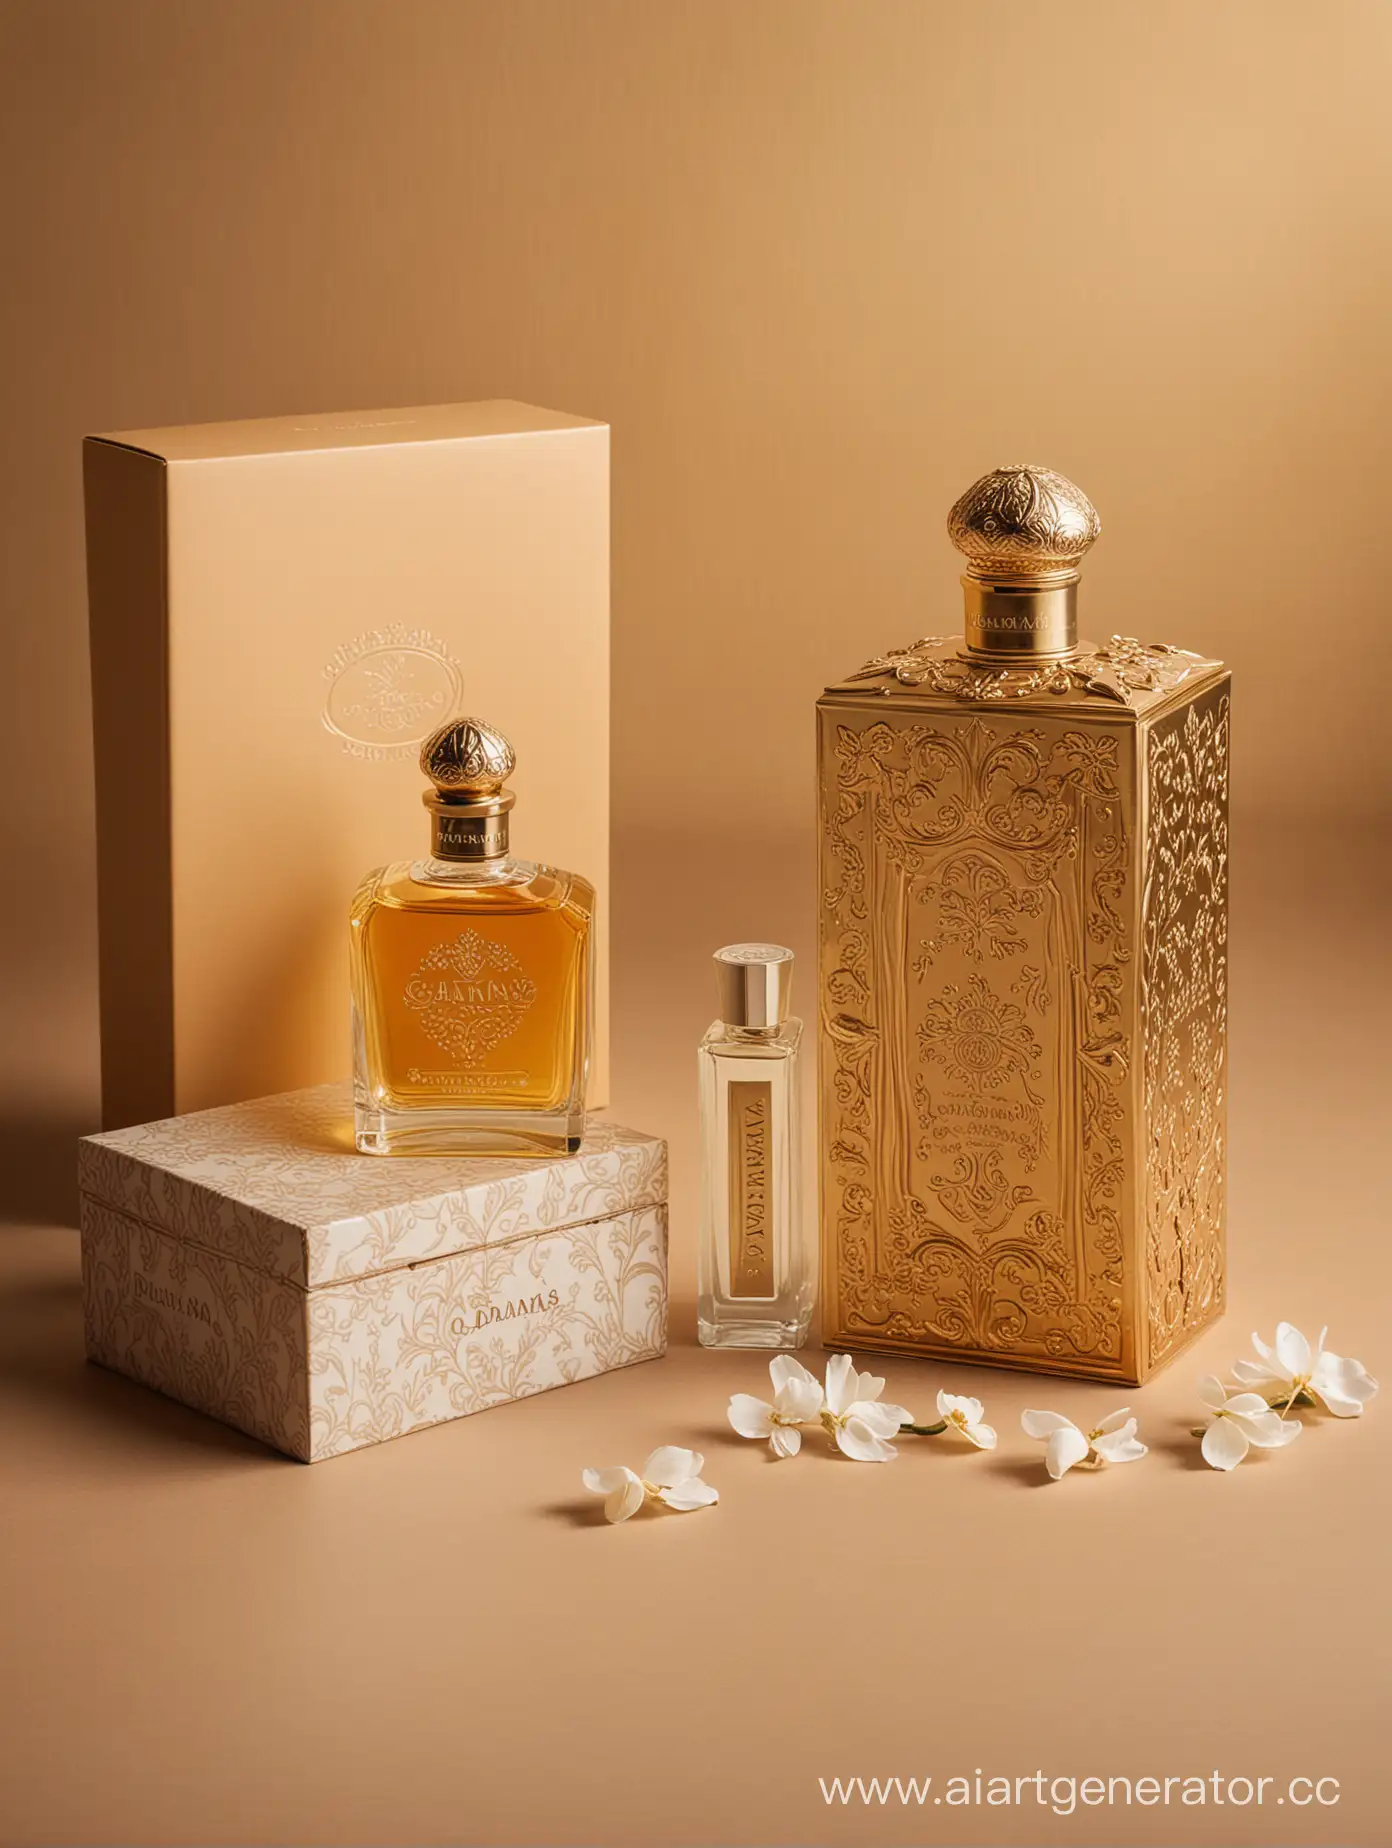 a bottle of damas cologne sitting next to a box, a flemish Baroque by Demetrios Farmakopoulos, instagram contest winner, dau-al-set, dynamic composition, contest winner, feminine
golden background